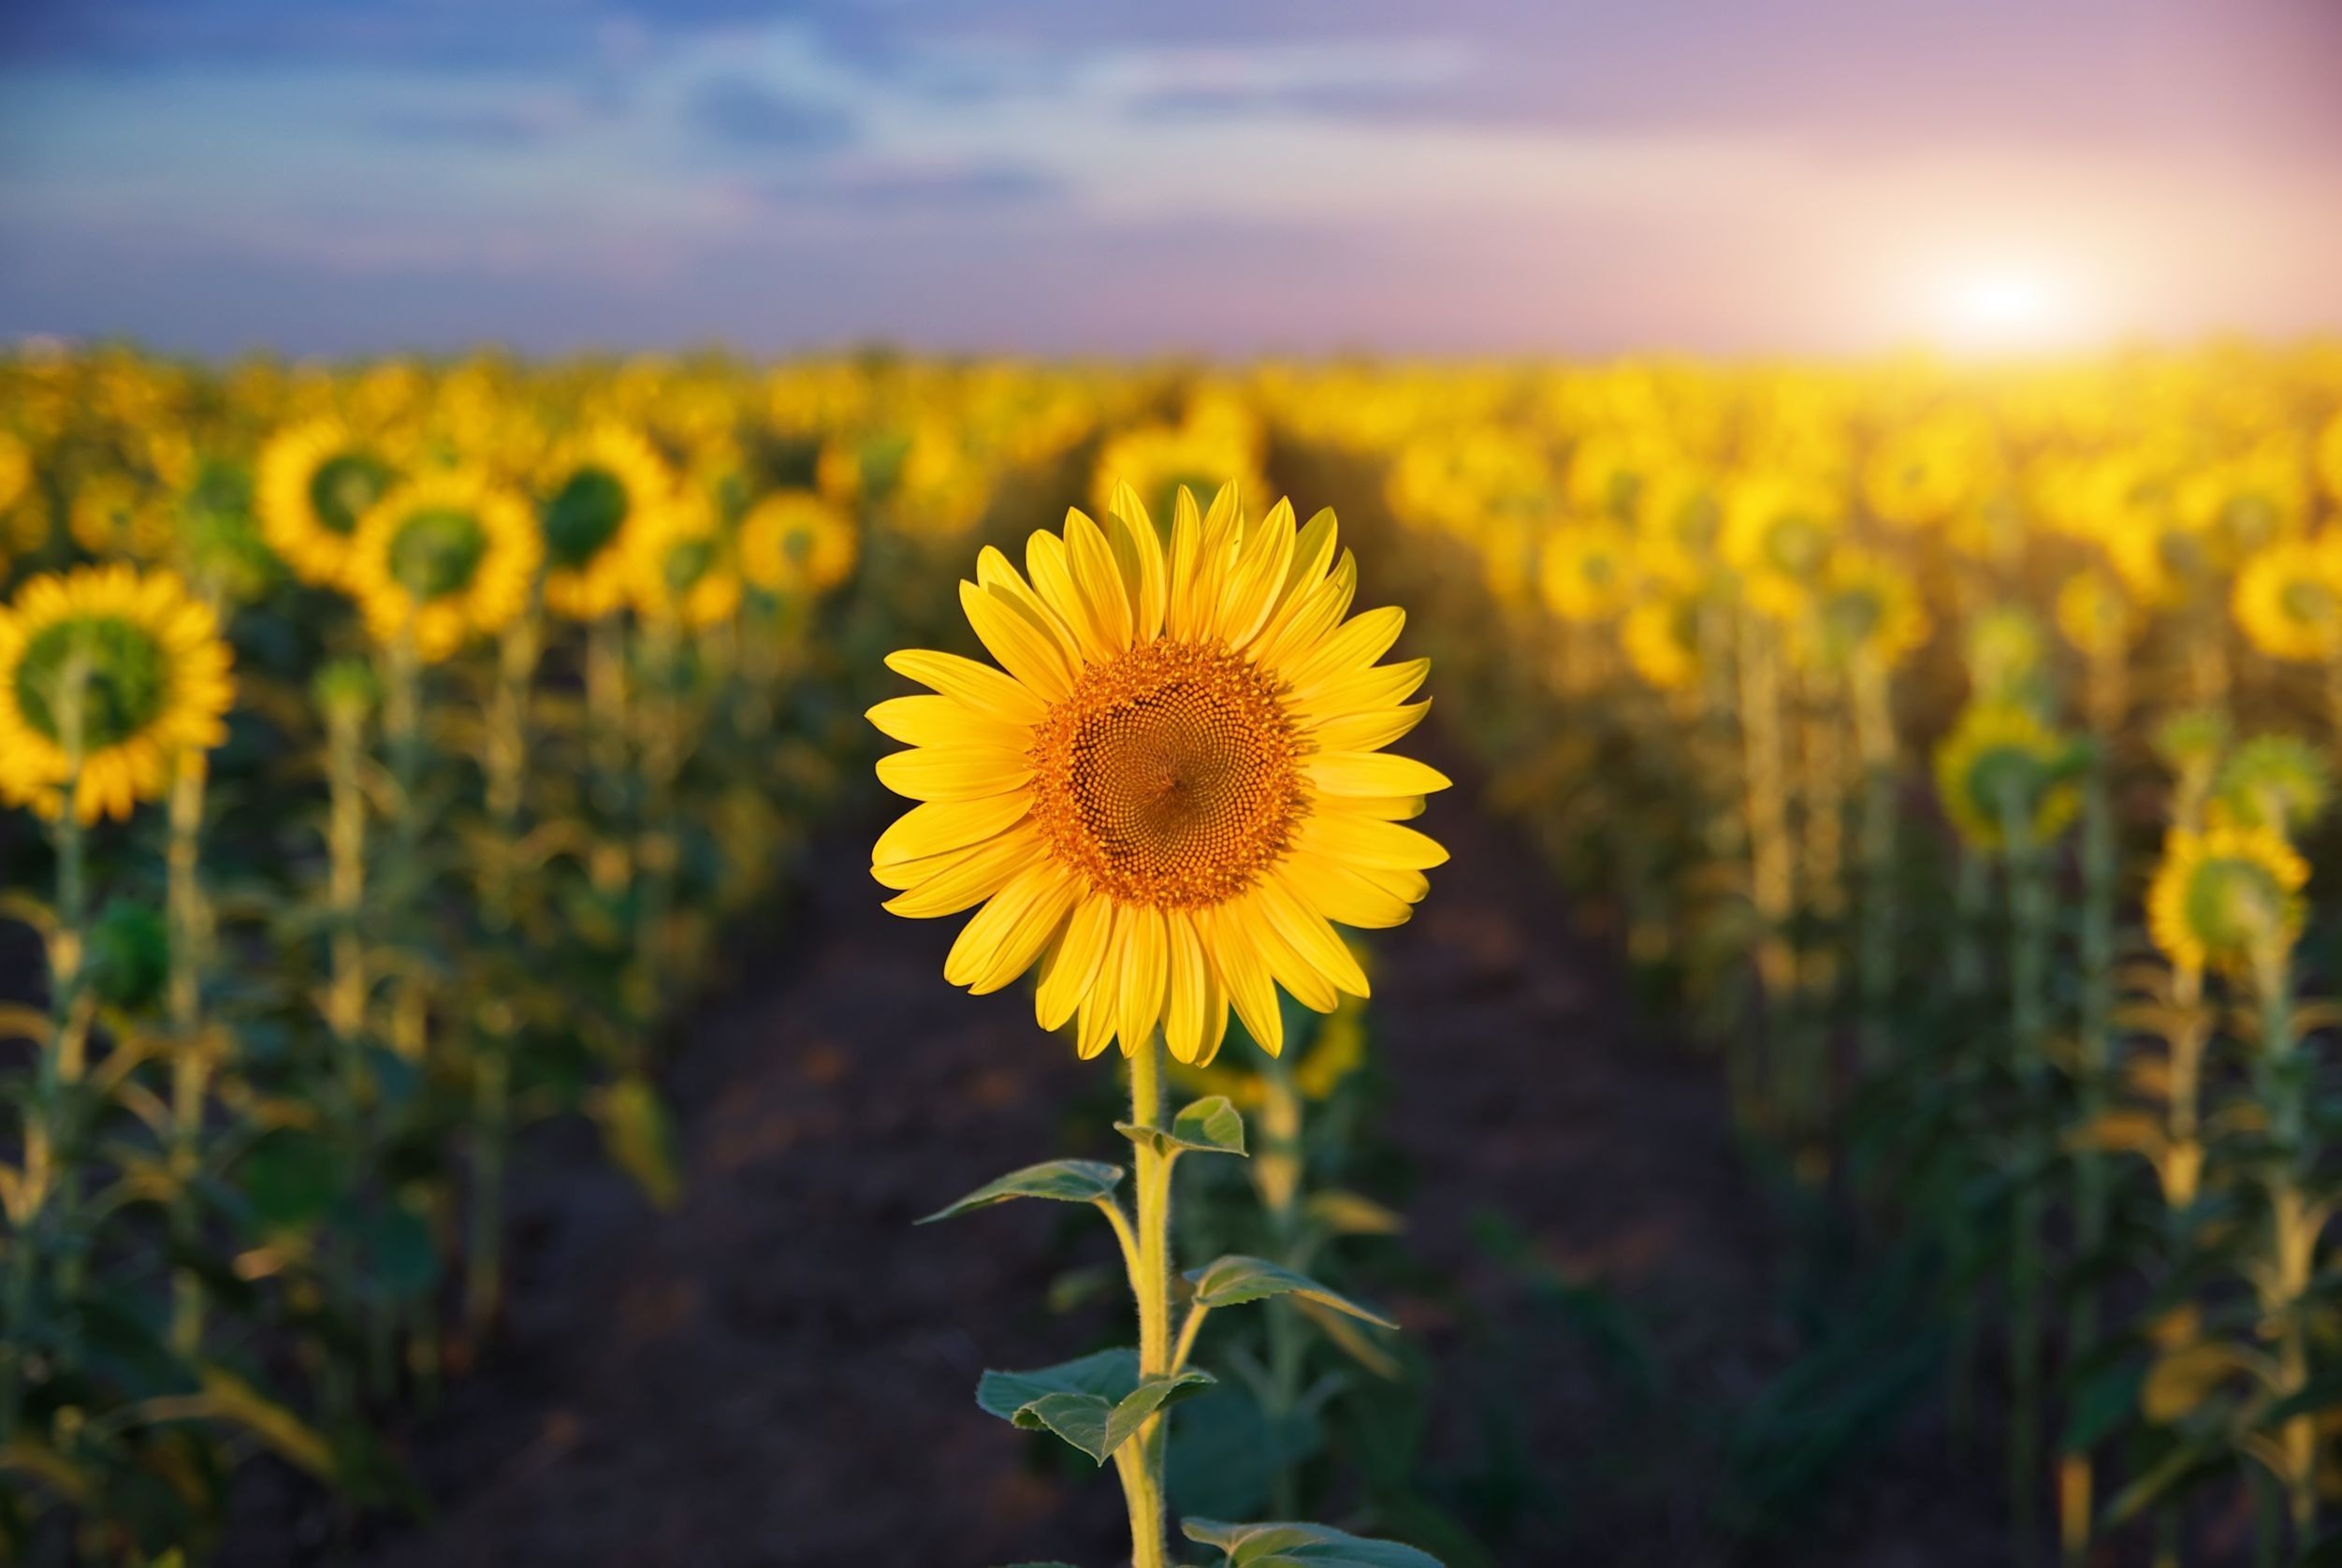 desktop wallpaper hd widescreen free download,flower,sunflower,flowering plant,sky,yellow